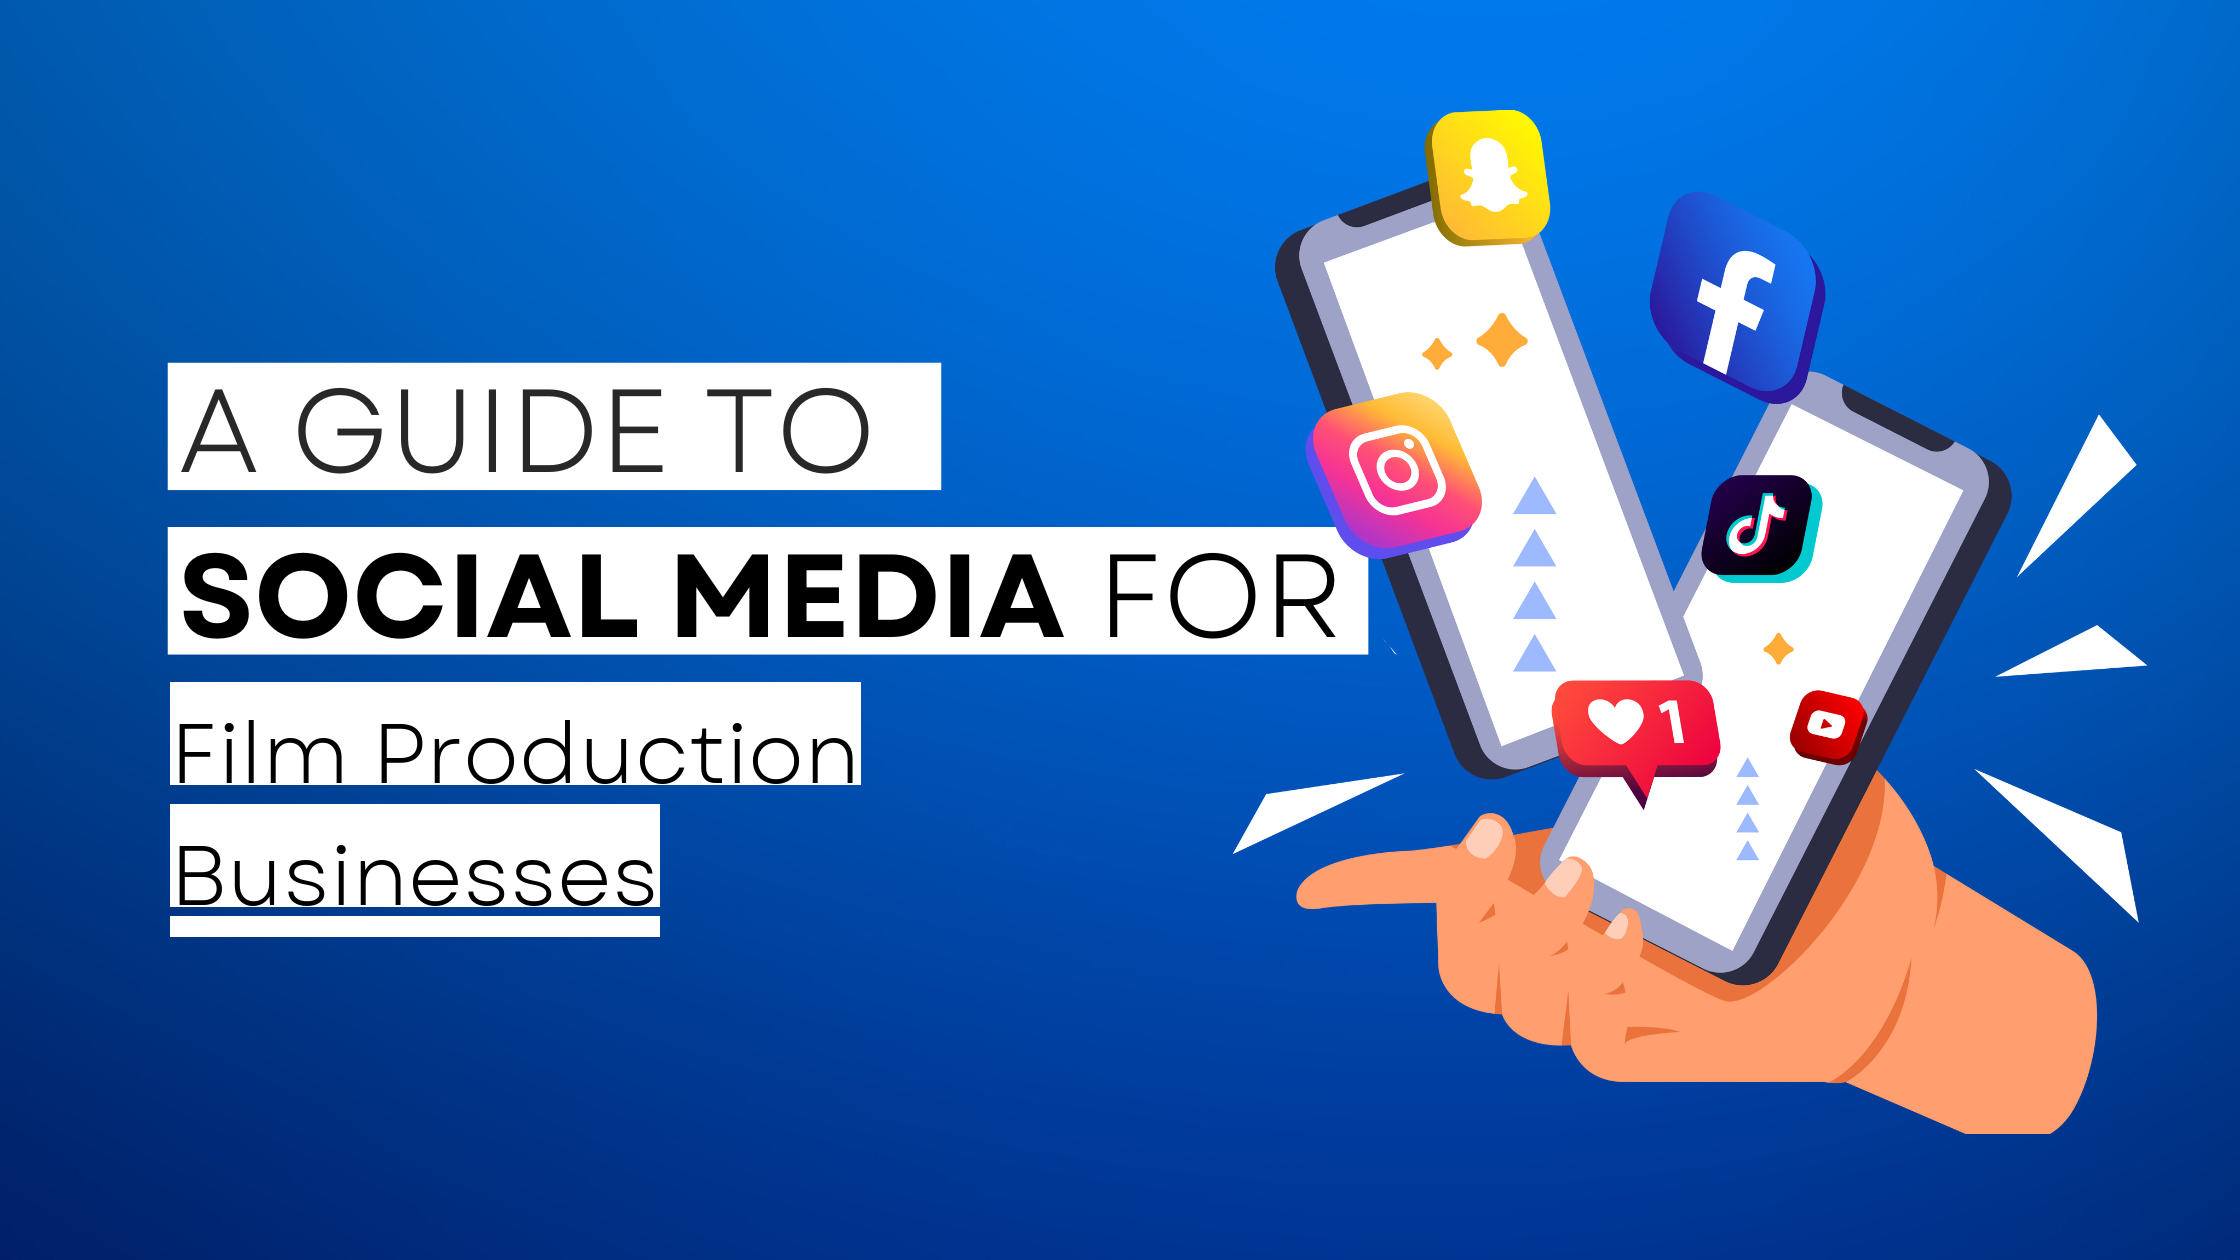 How to start Film Production on social media